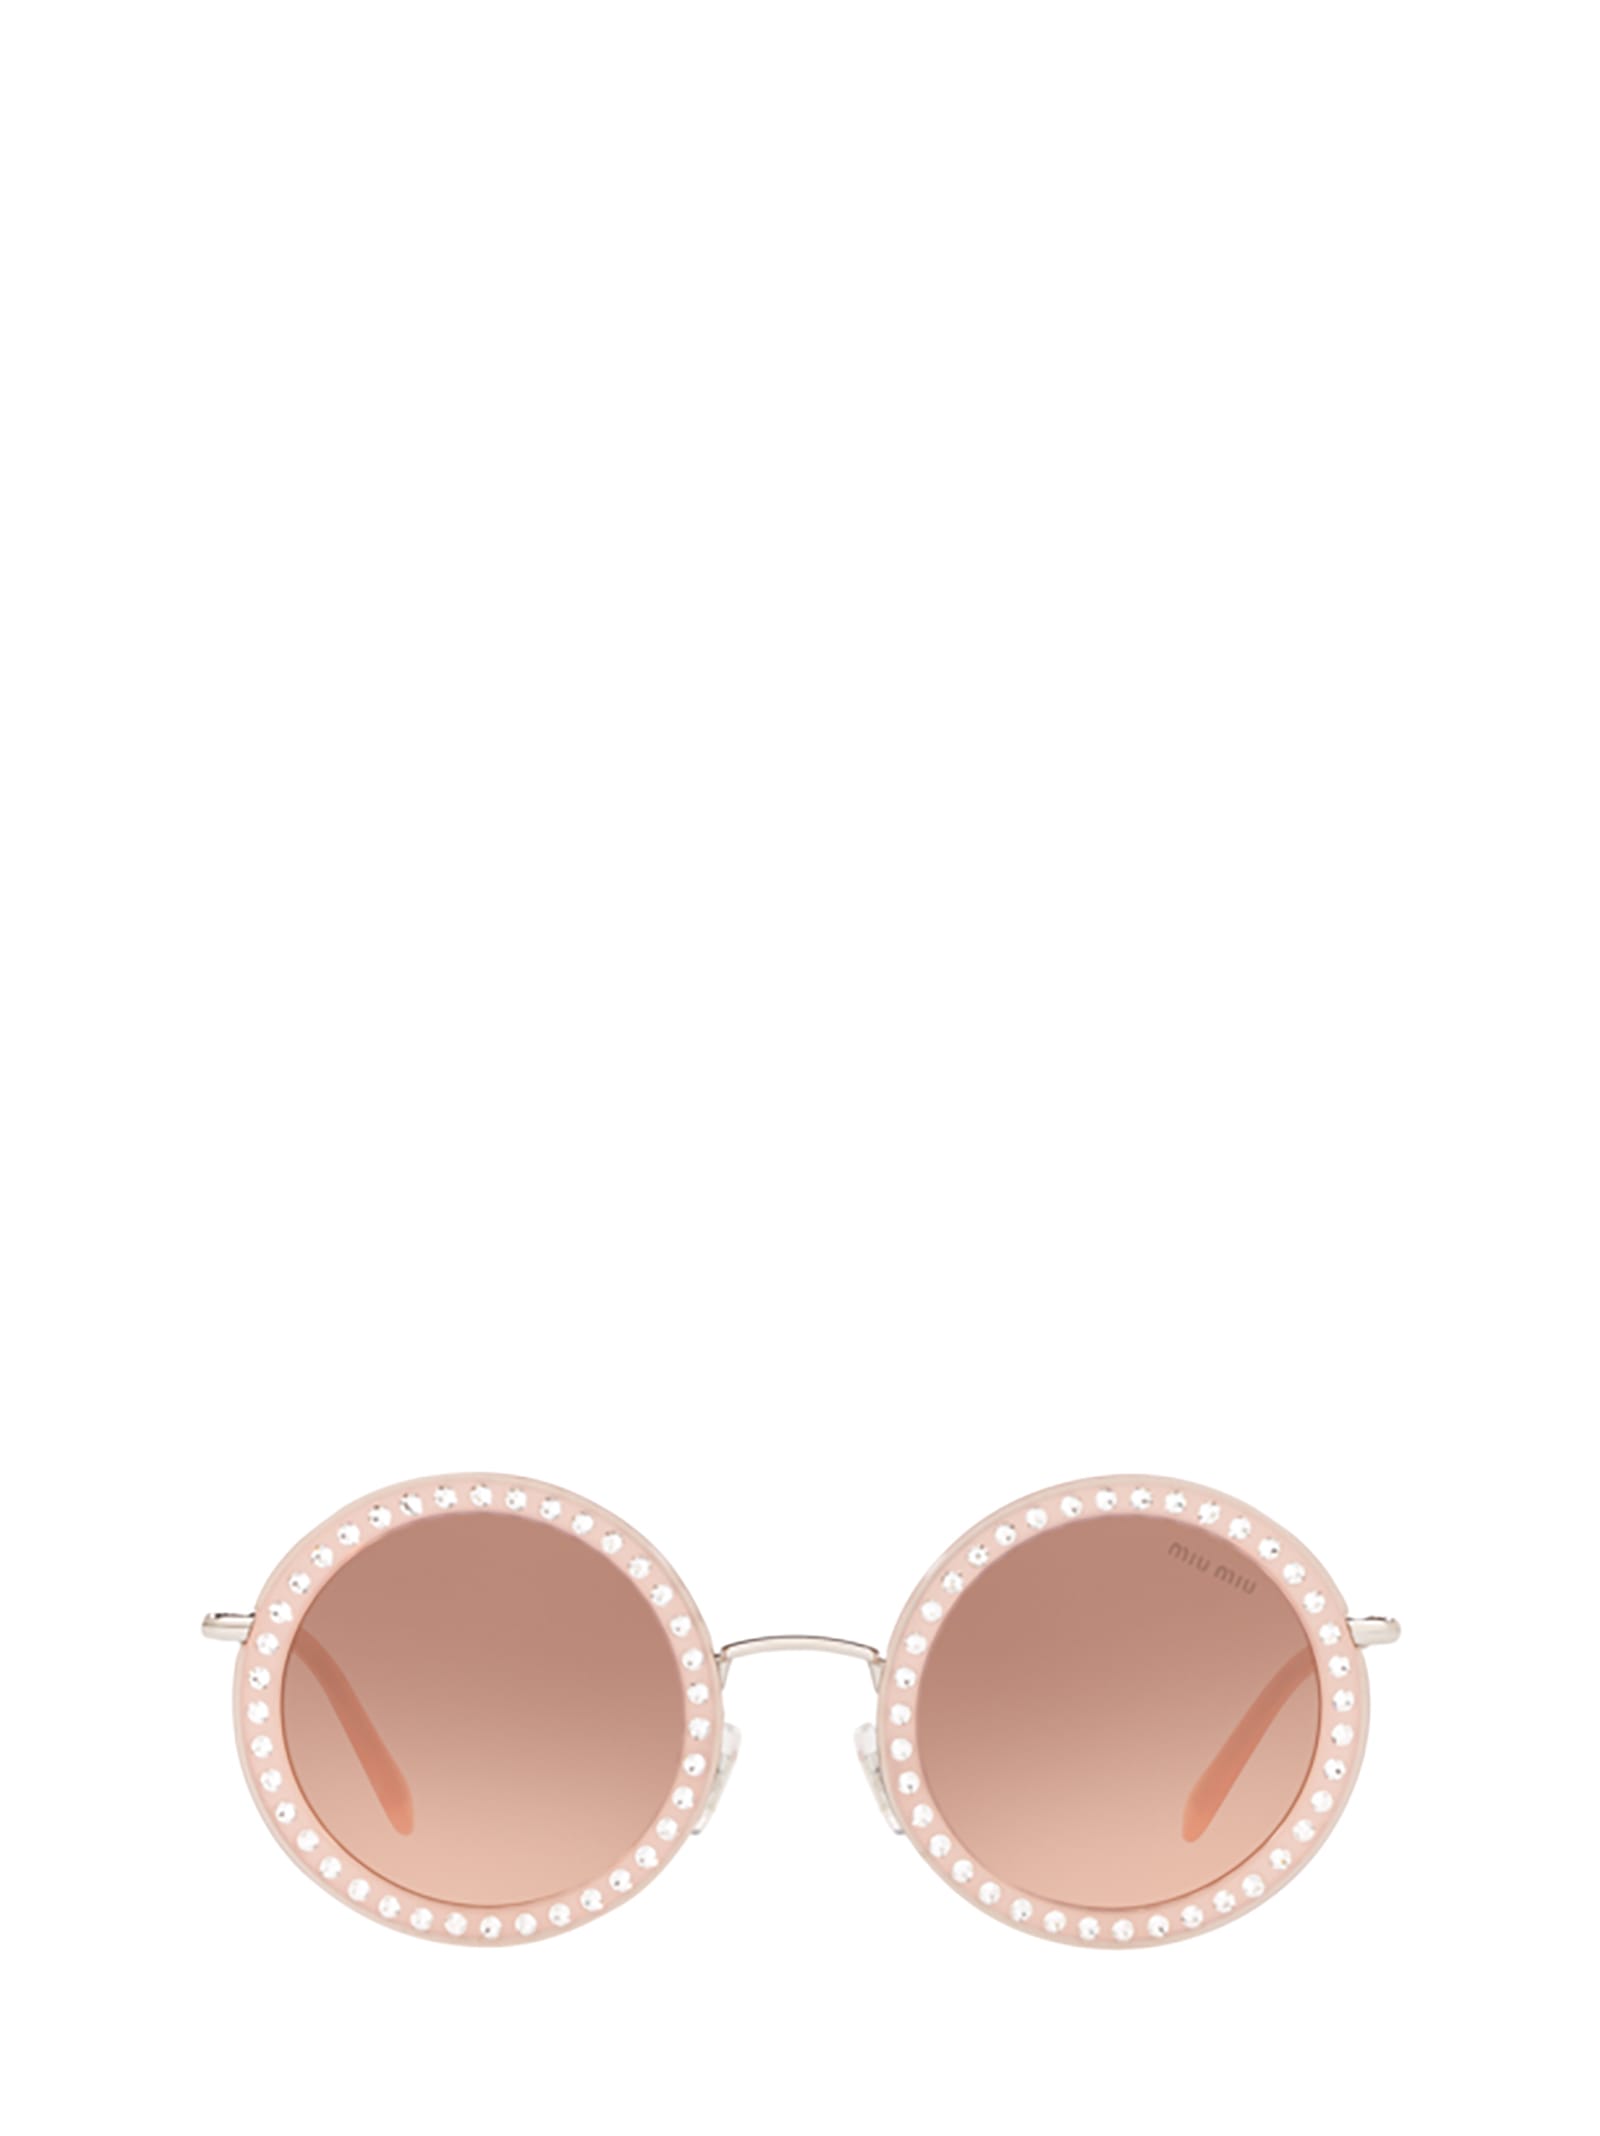 Miu Miu Miu Miu Mu 59us Opal Pink Sunglasses